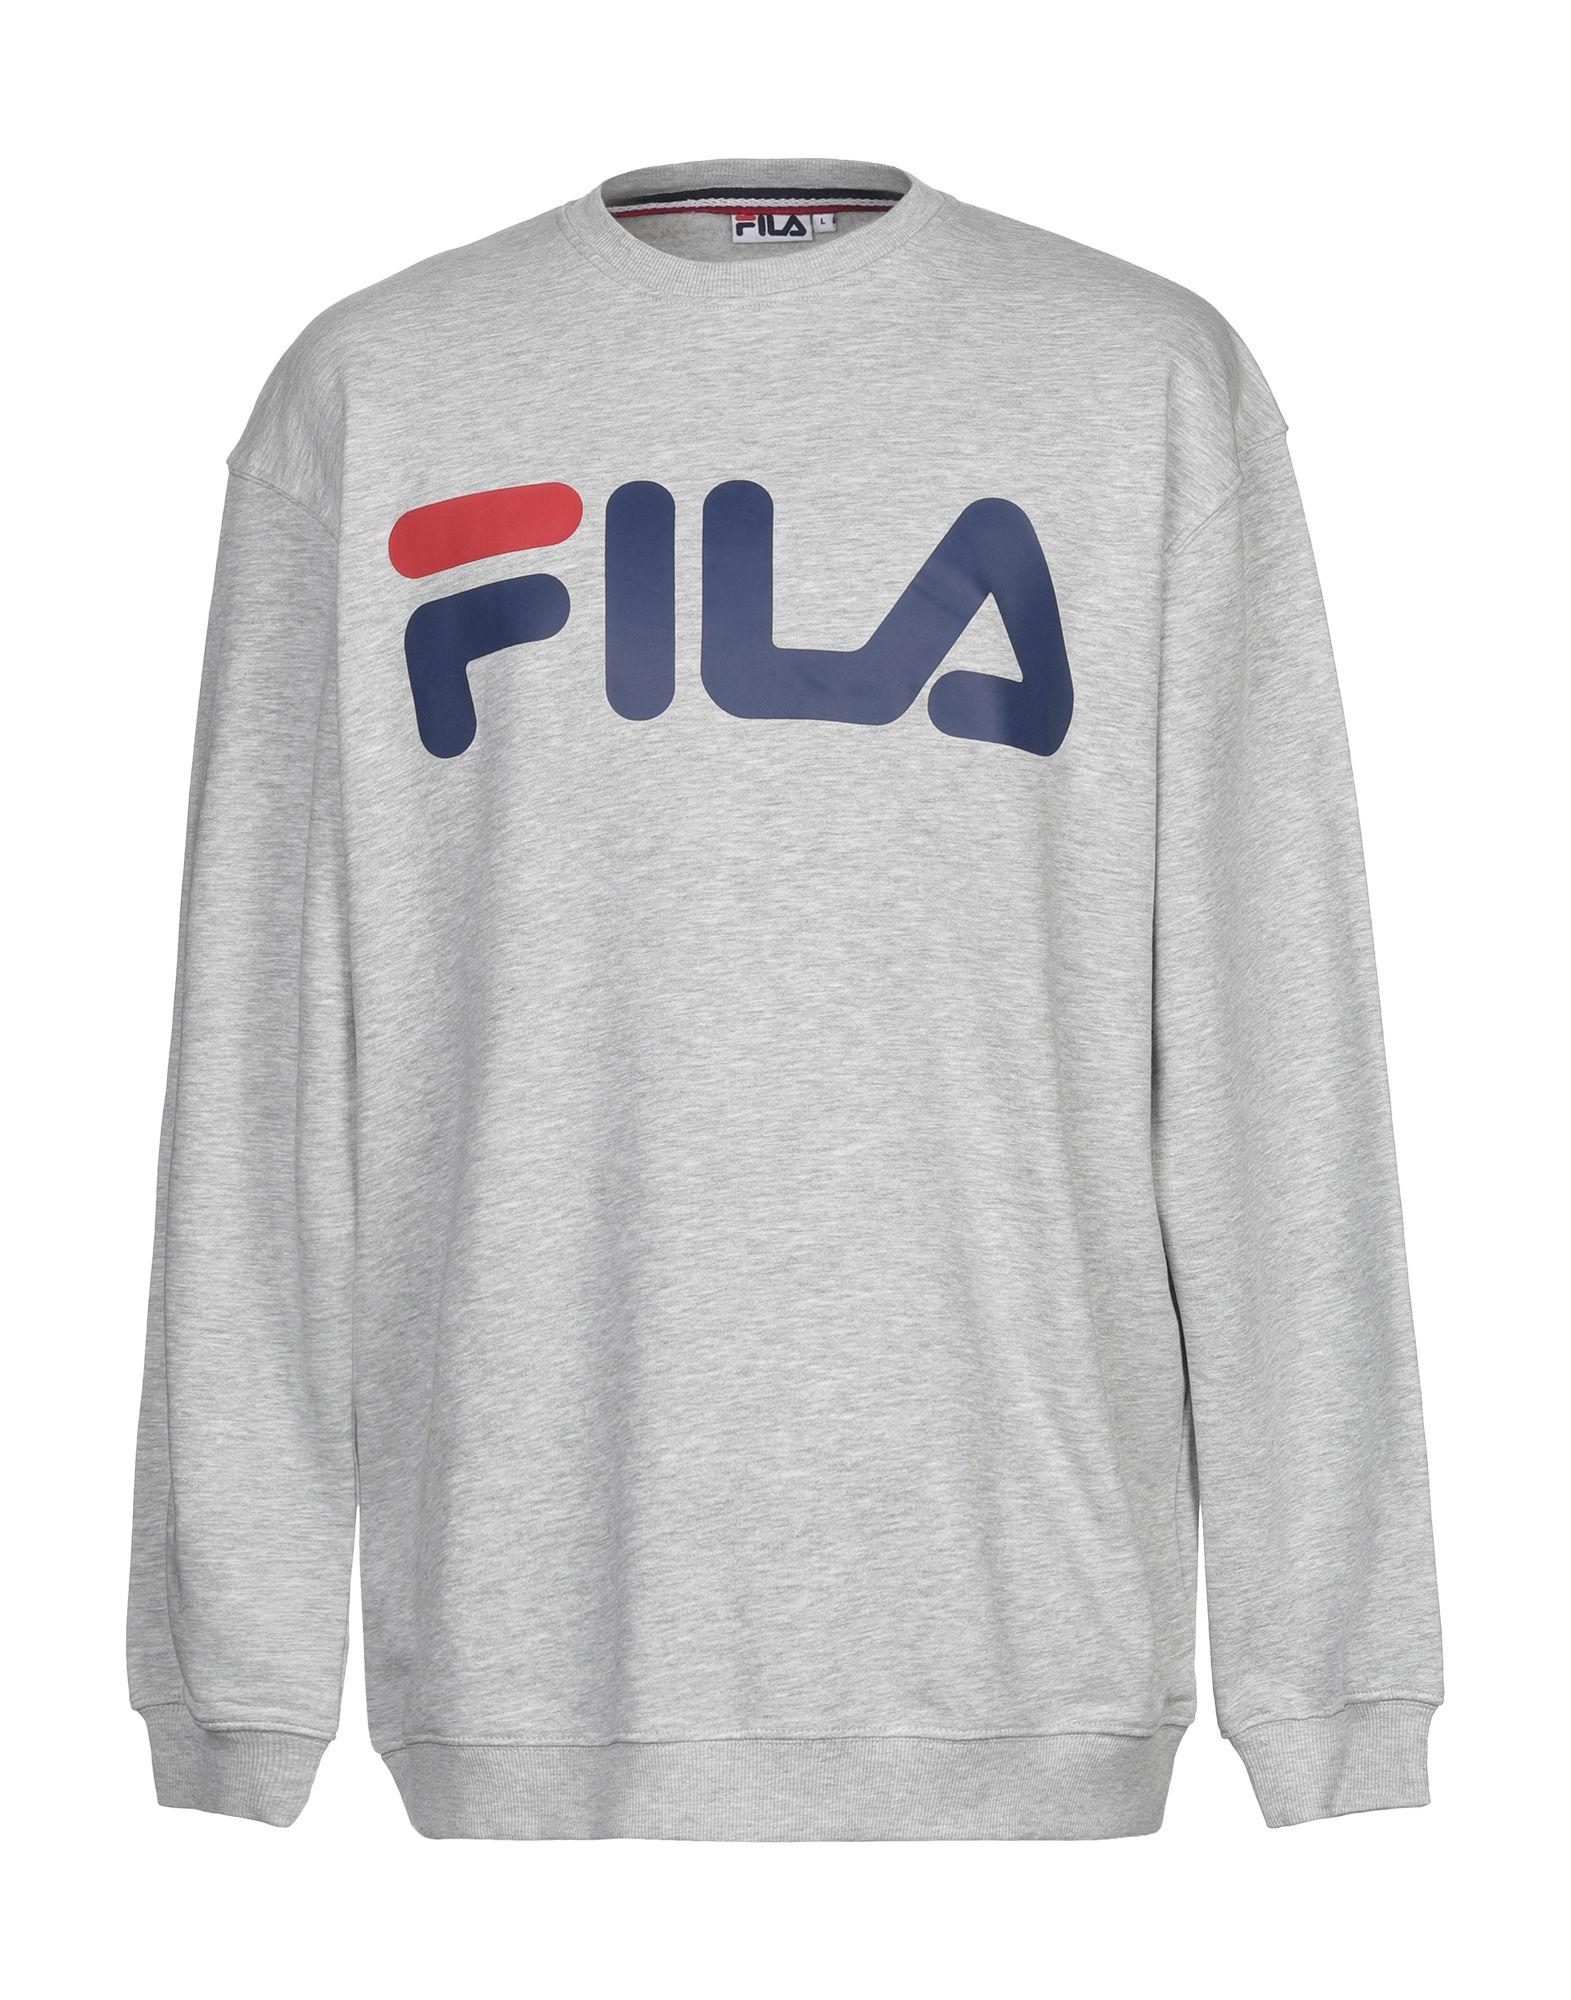 Fila Cotton Sweatshirt in Light Grey (Gray) for Men - Save 57% - Lyst